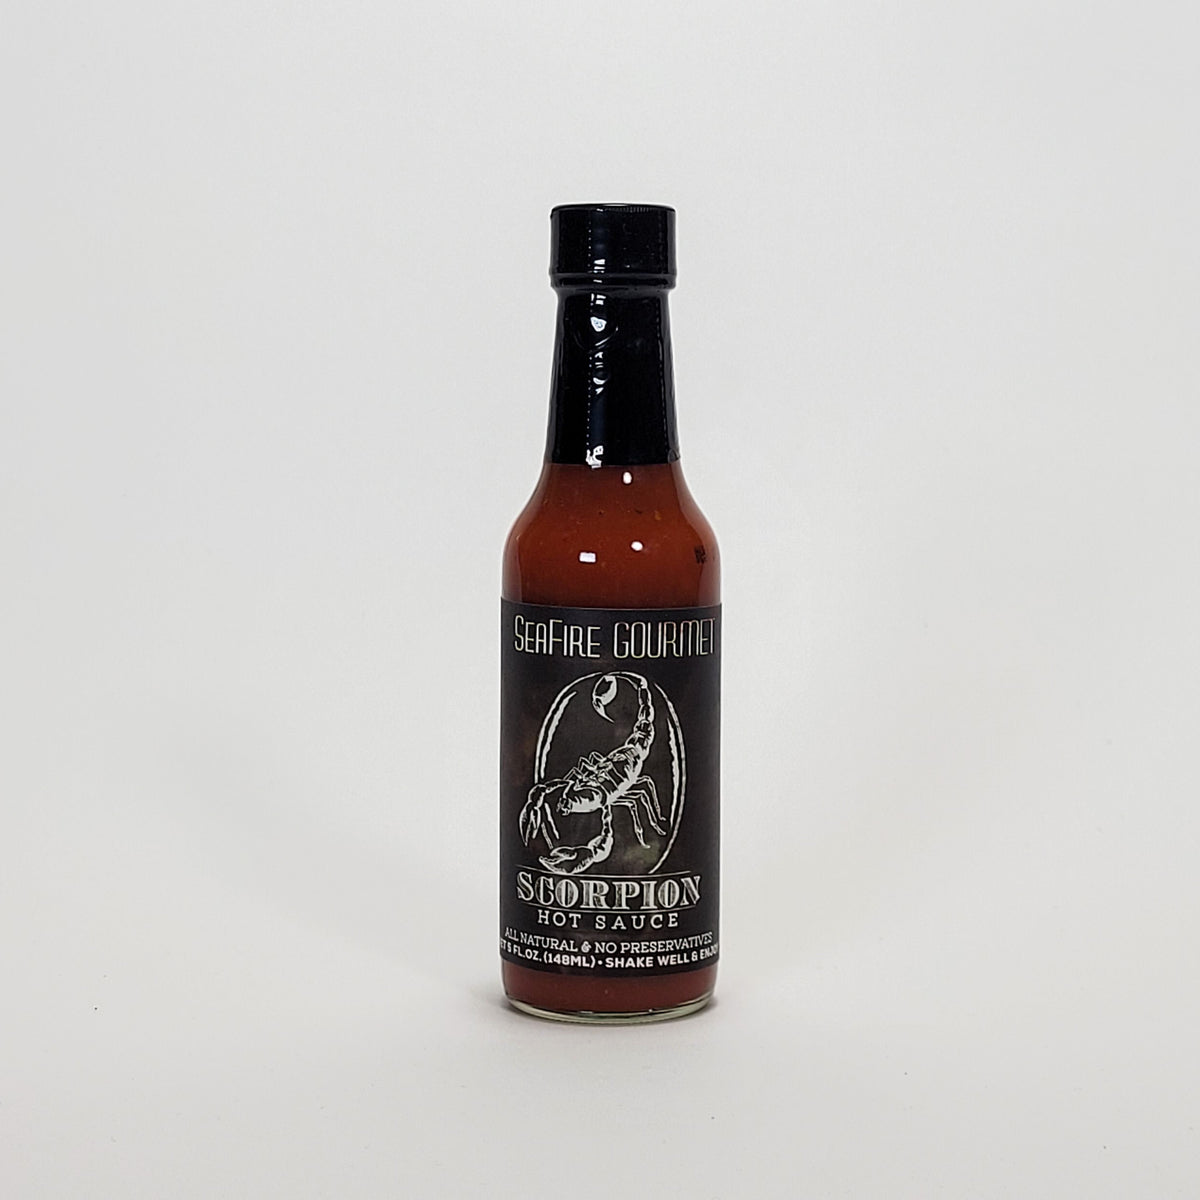 Seafire Gourmet Scorpion hot sauce